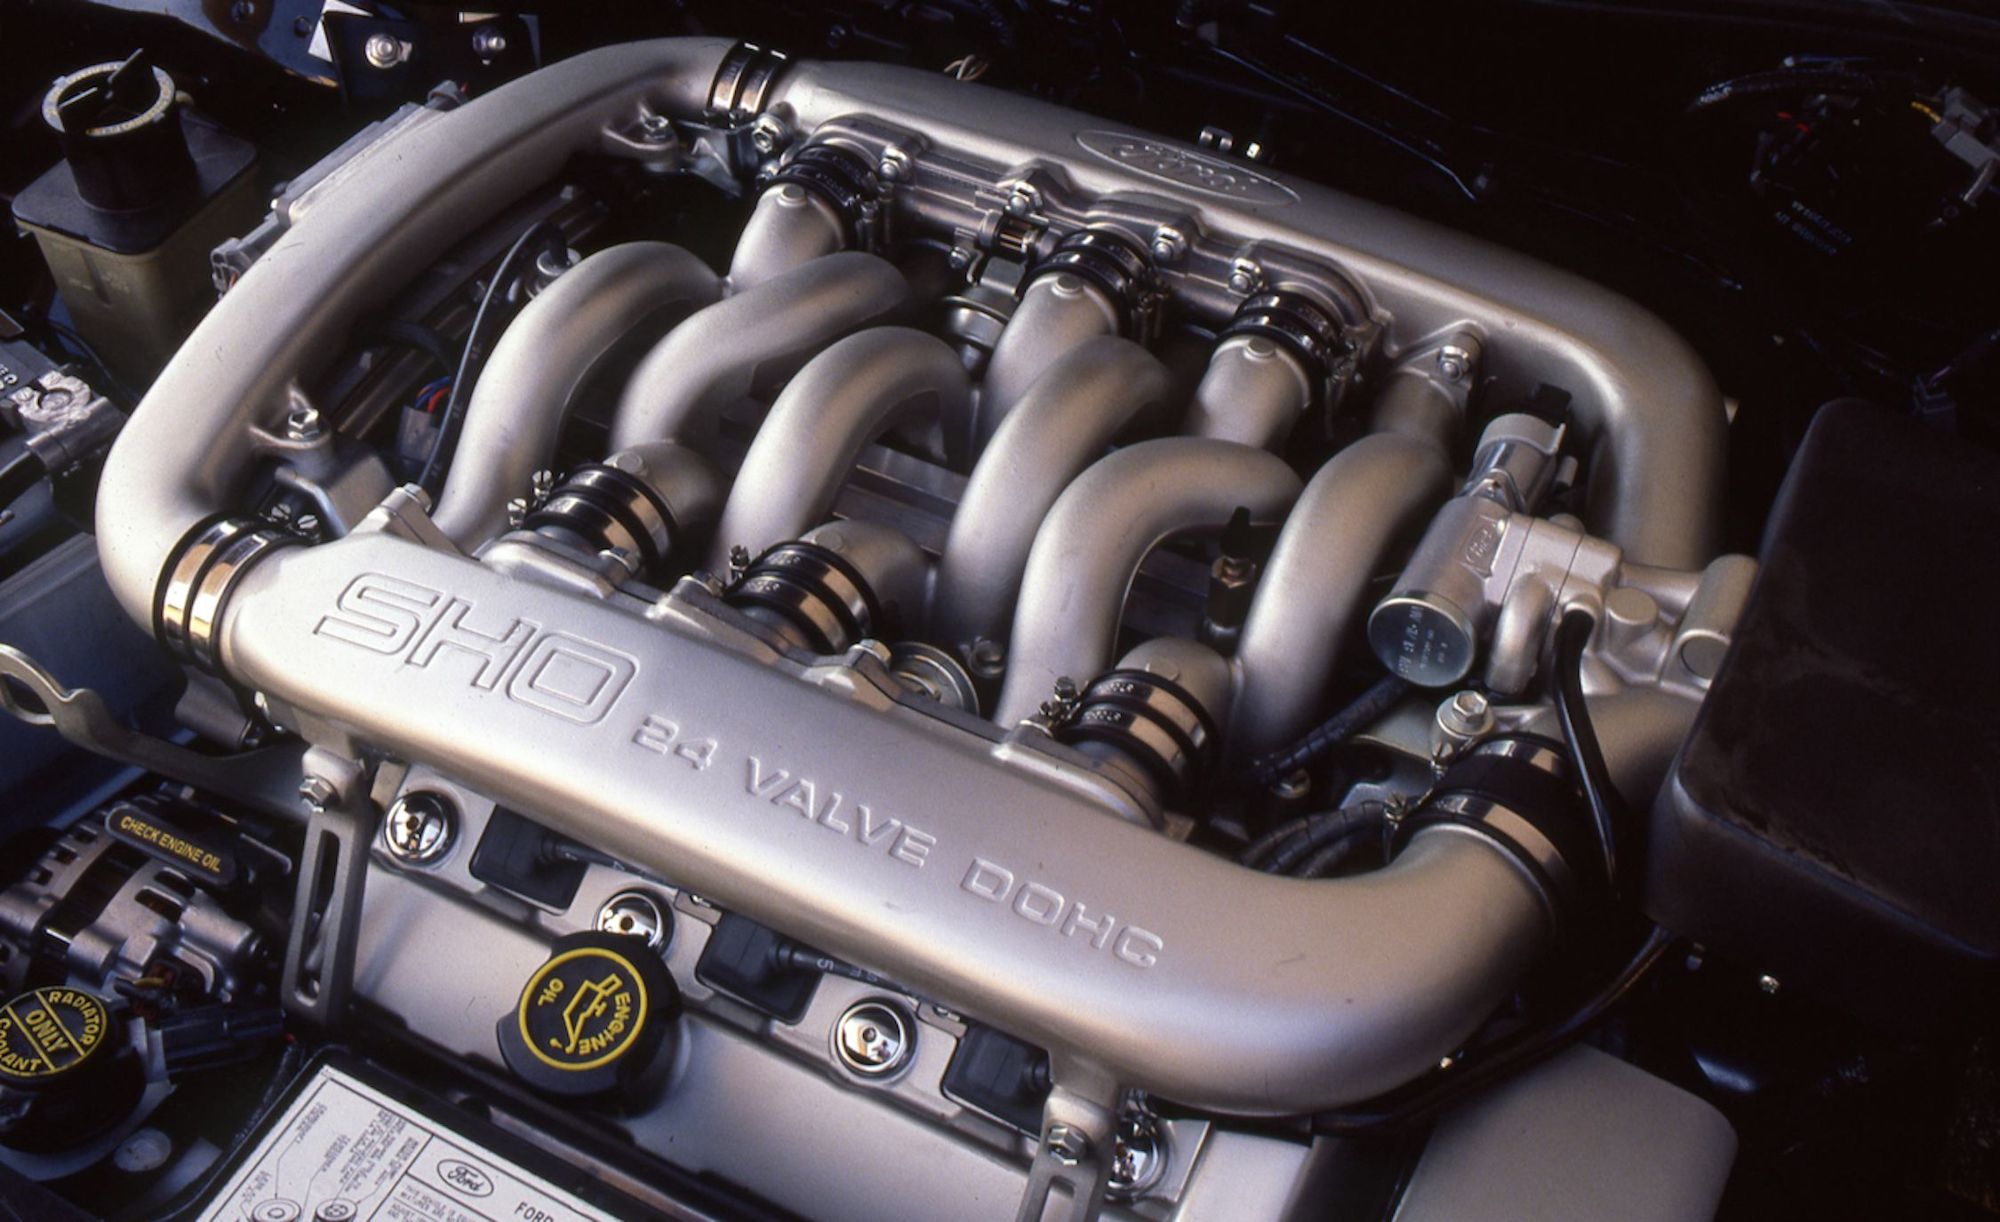 2.-1989-ford-taurus-sho-30-liter-v-6-engine-photo-568183-s-original.jpg